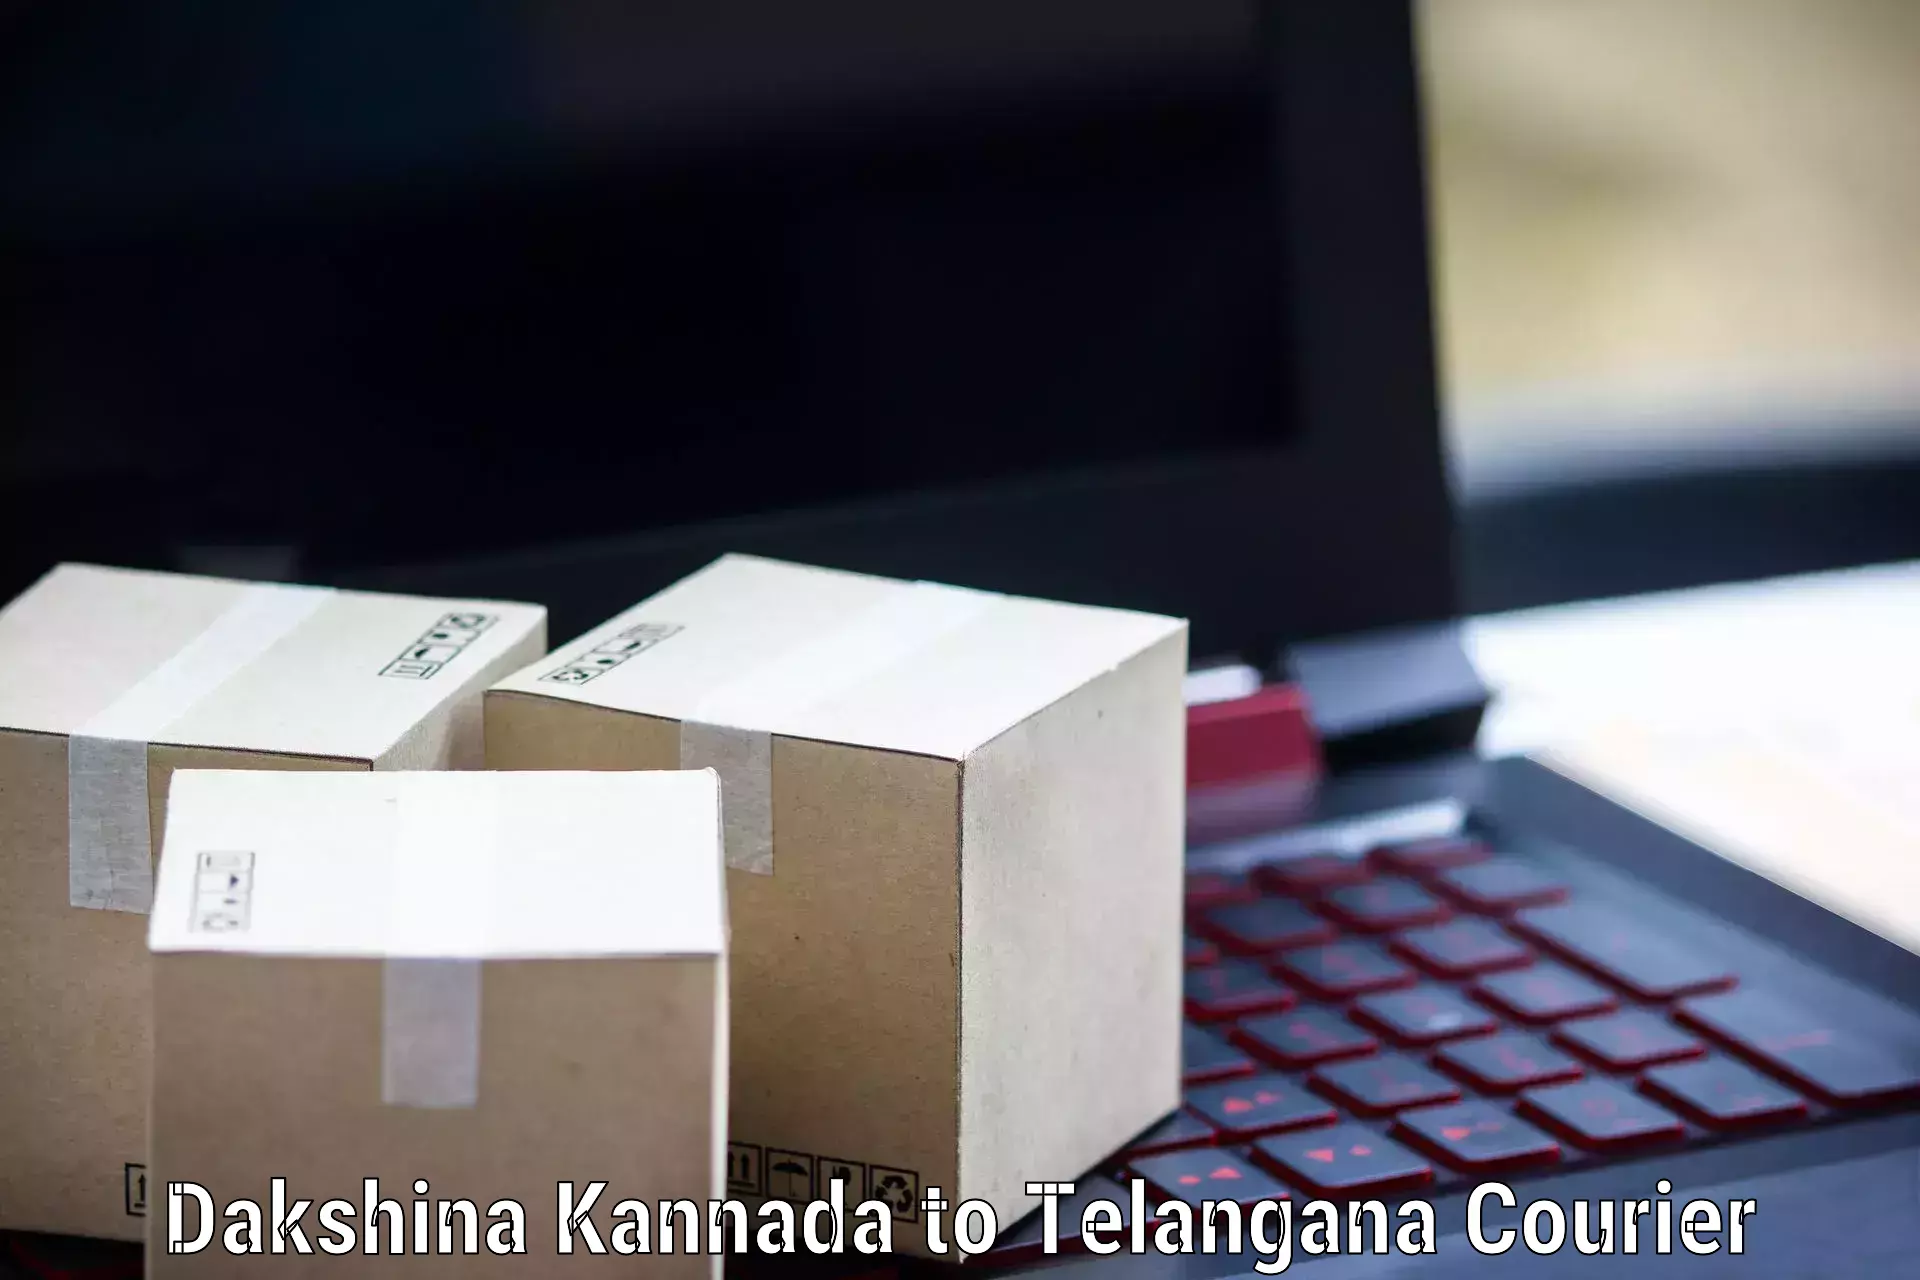 Courier service efficiency in Dakshina Kannada to Vikarabad